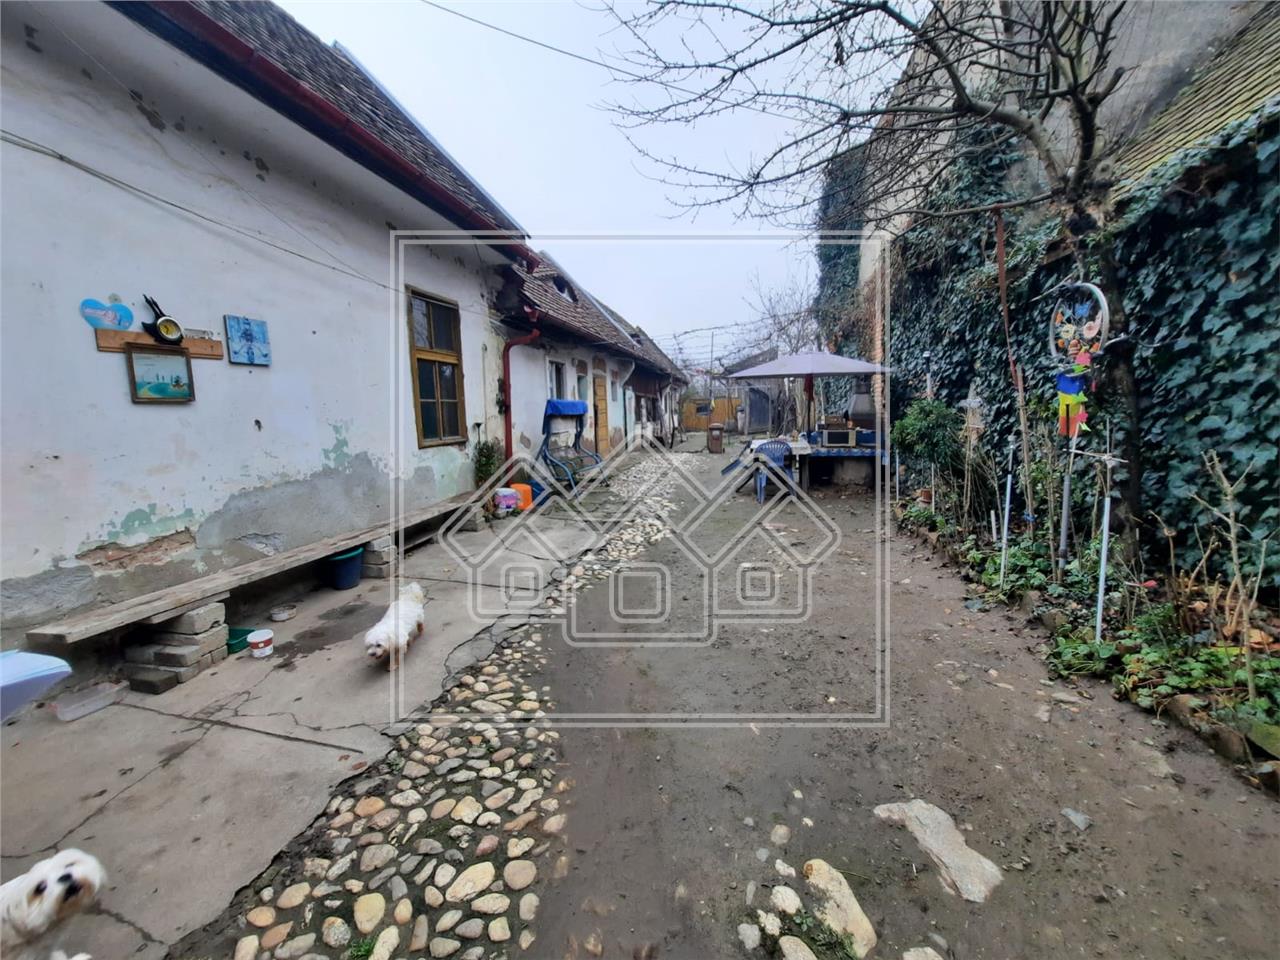 Apartament de vanzare in Sibiu -la casa -132mp, teren 674mp - Turnisor